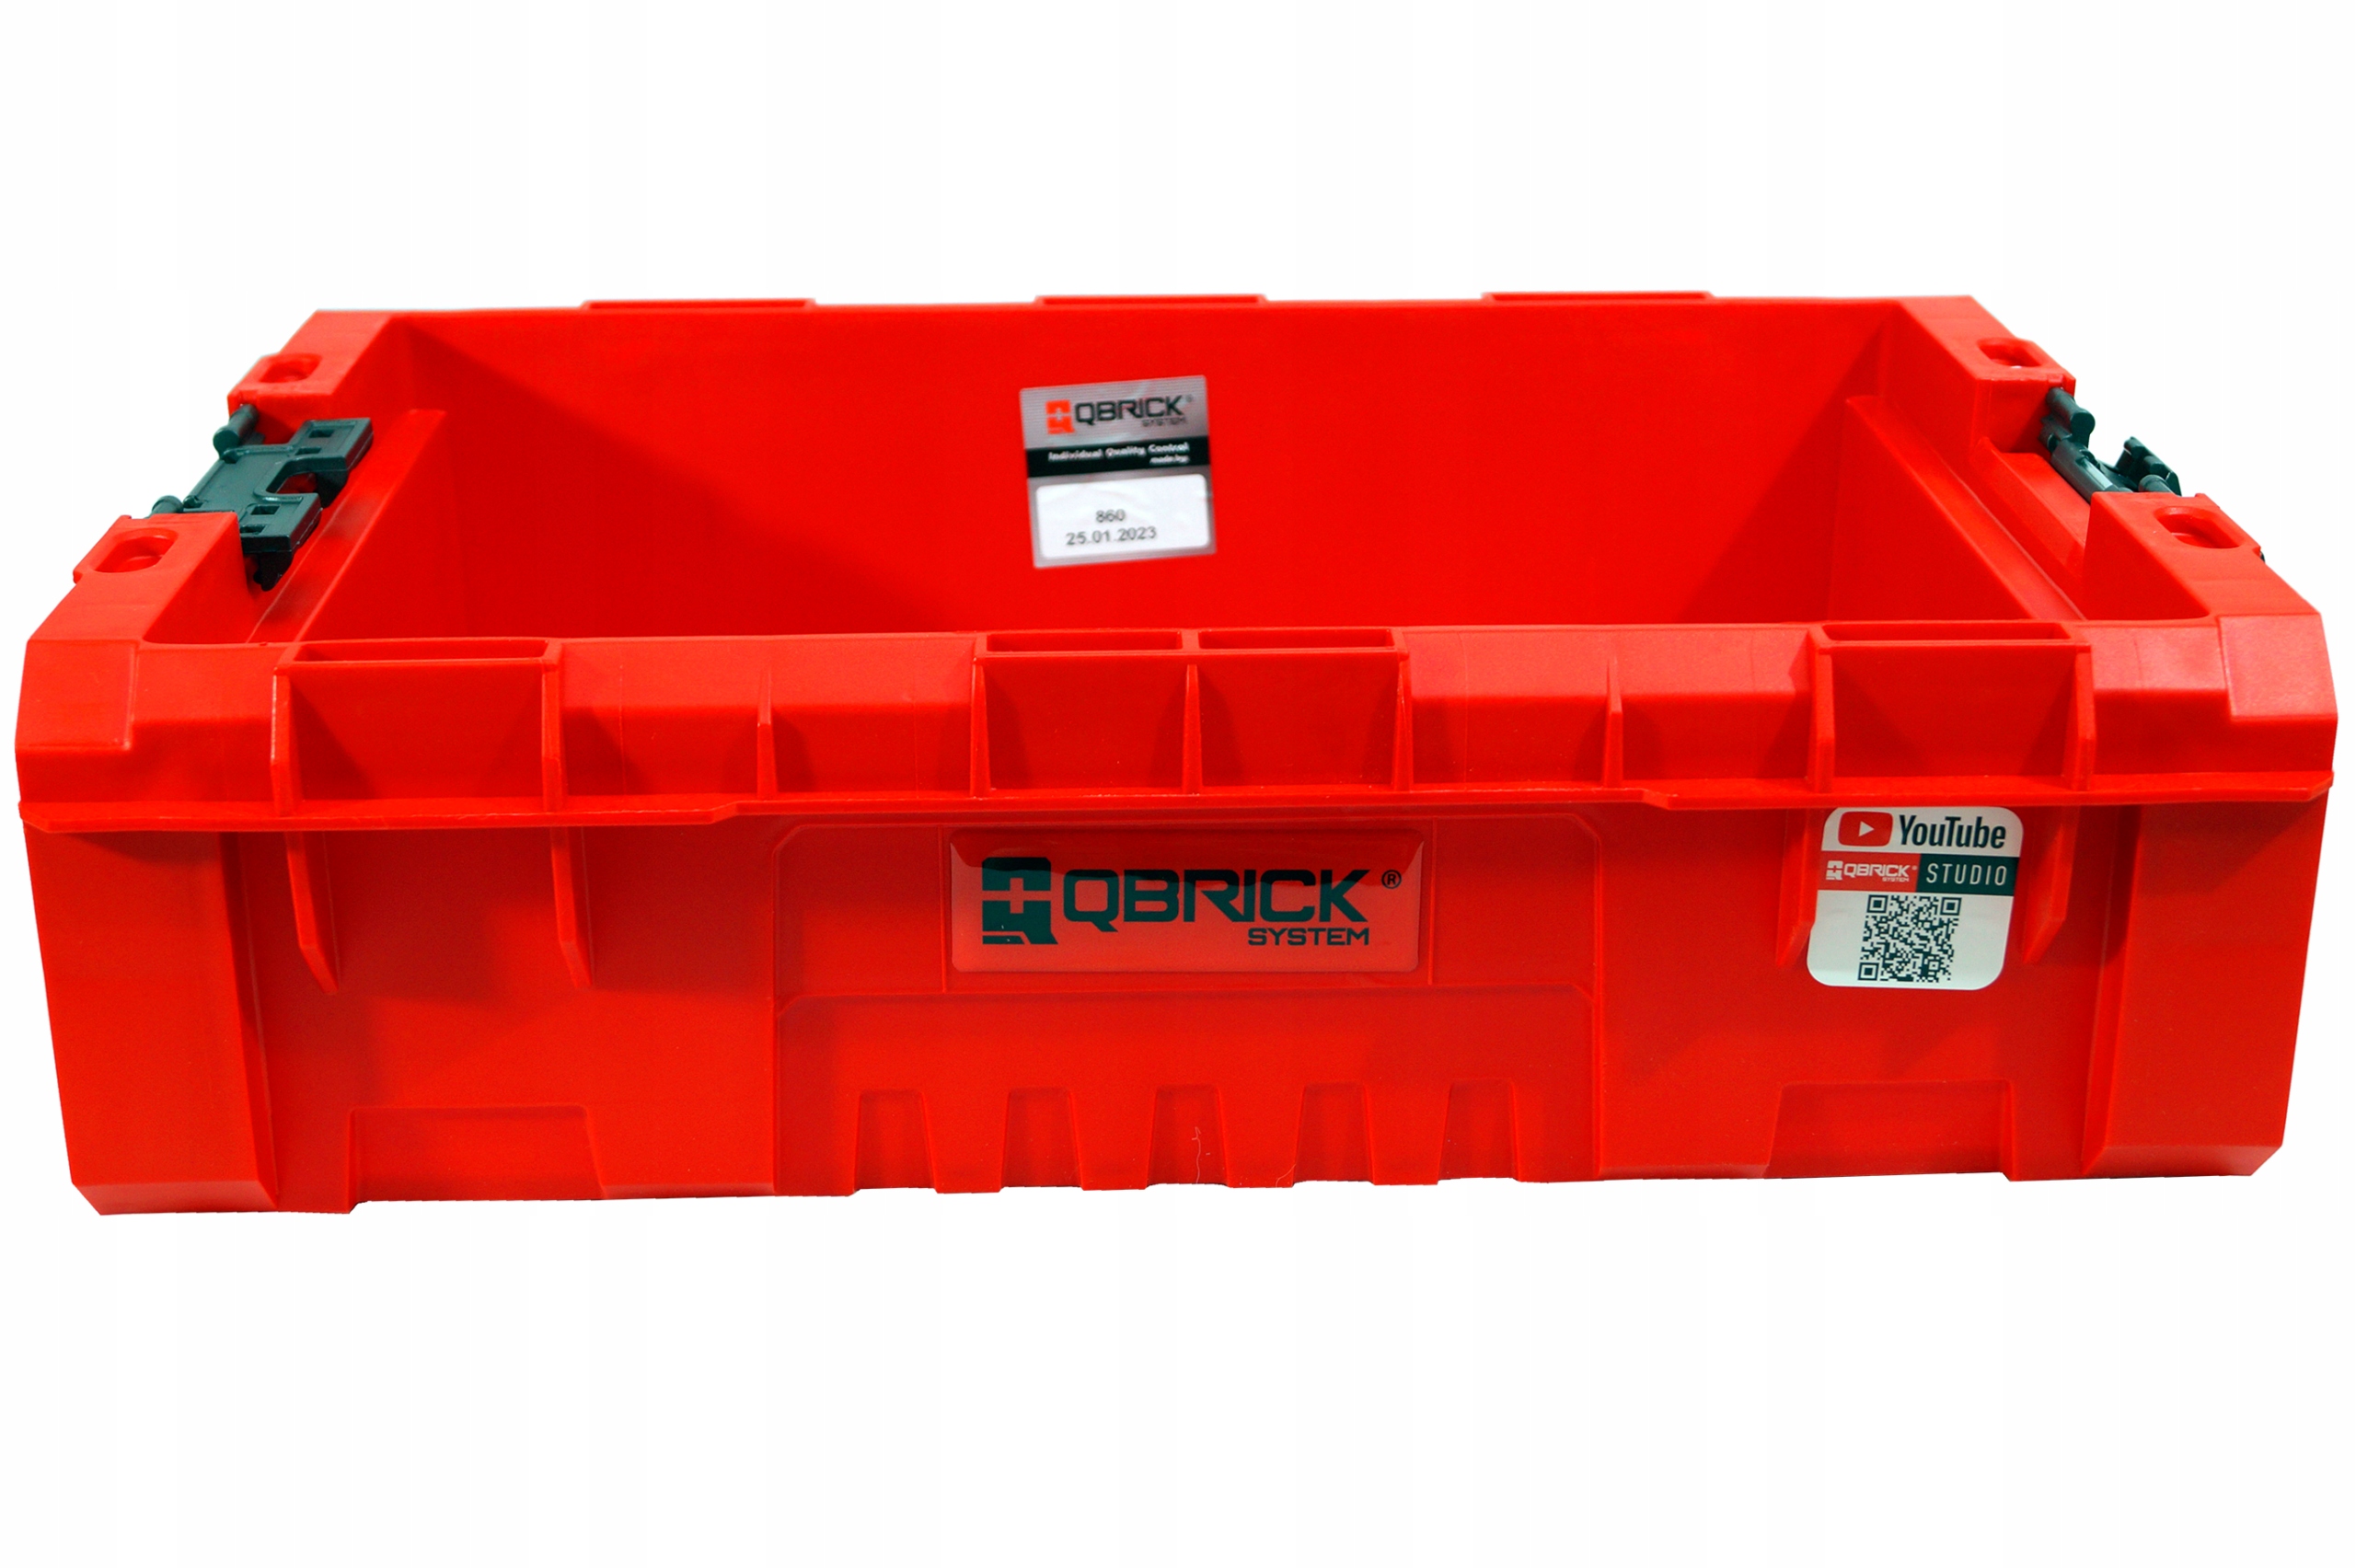 Qbrick System PRO Box 130 2.0 – Qbrick System